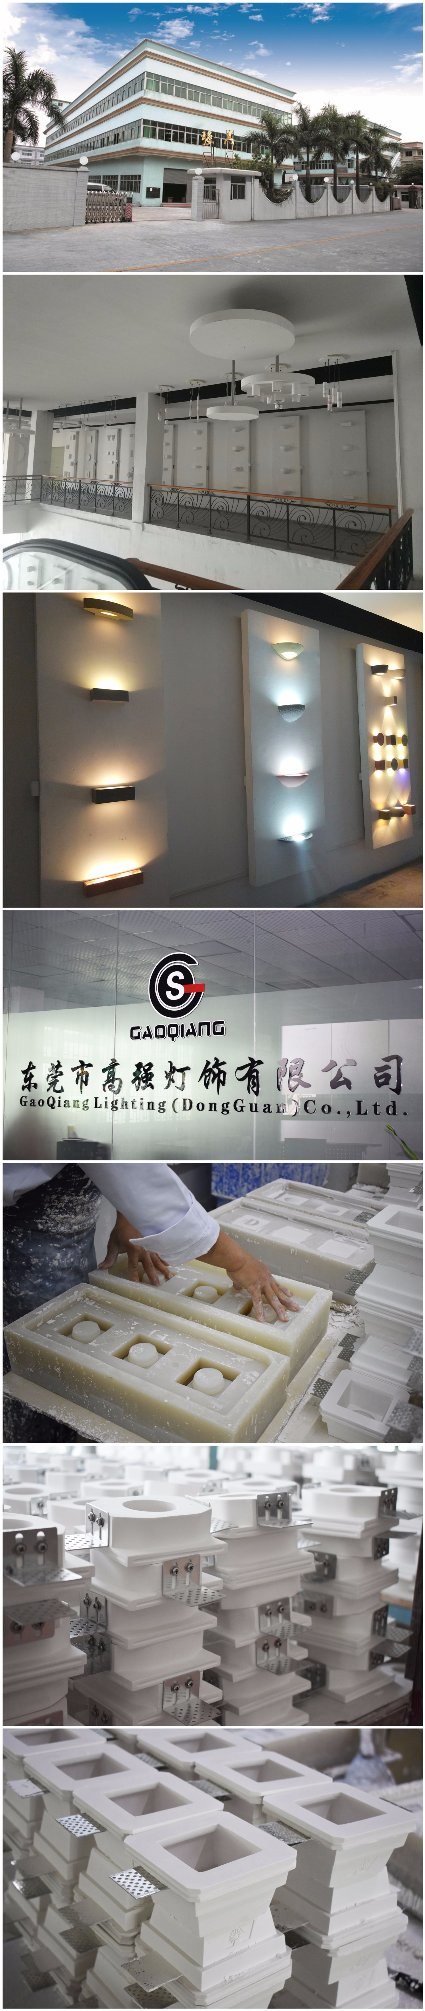 Modern Wall Lamp Decorative White Gypsum G9 Plaster Wall Light